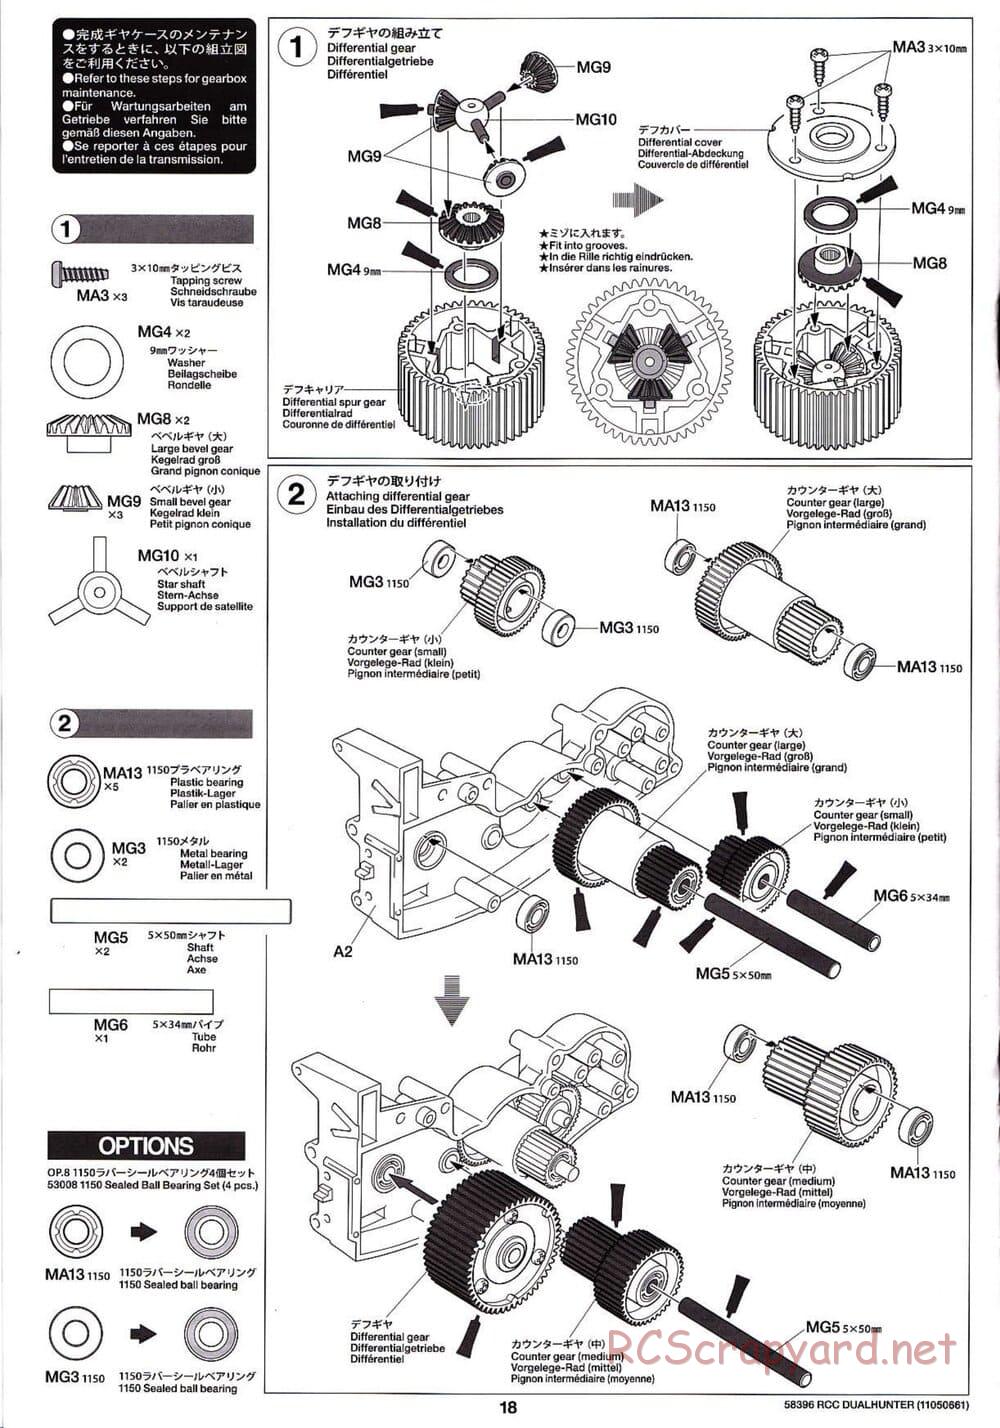 Tamiya - Dualhunter - WR-01 Chassis - Manual - Page 18